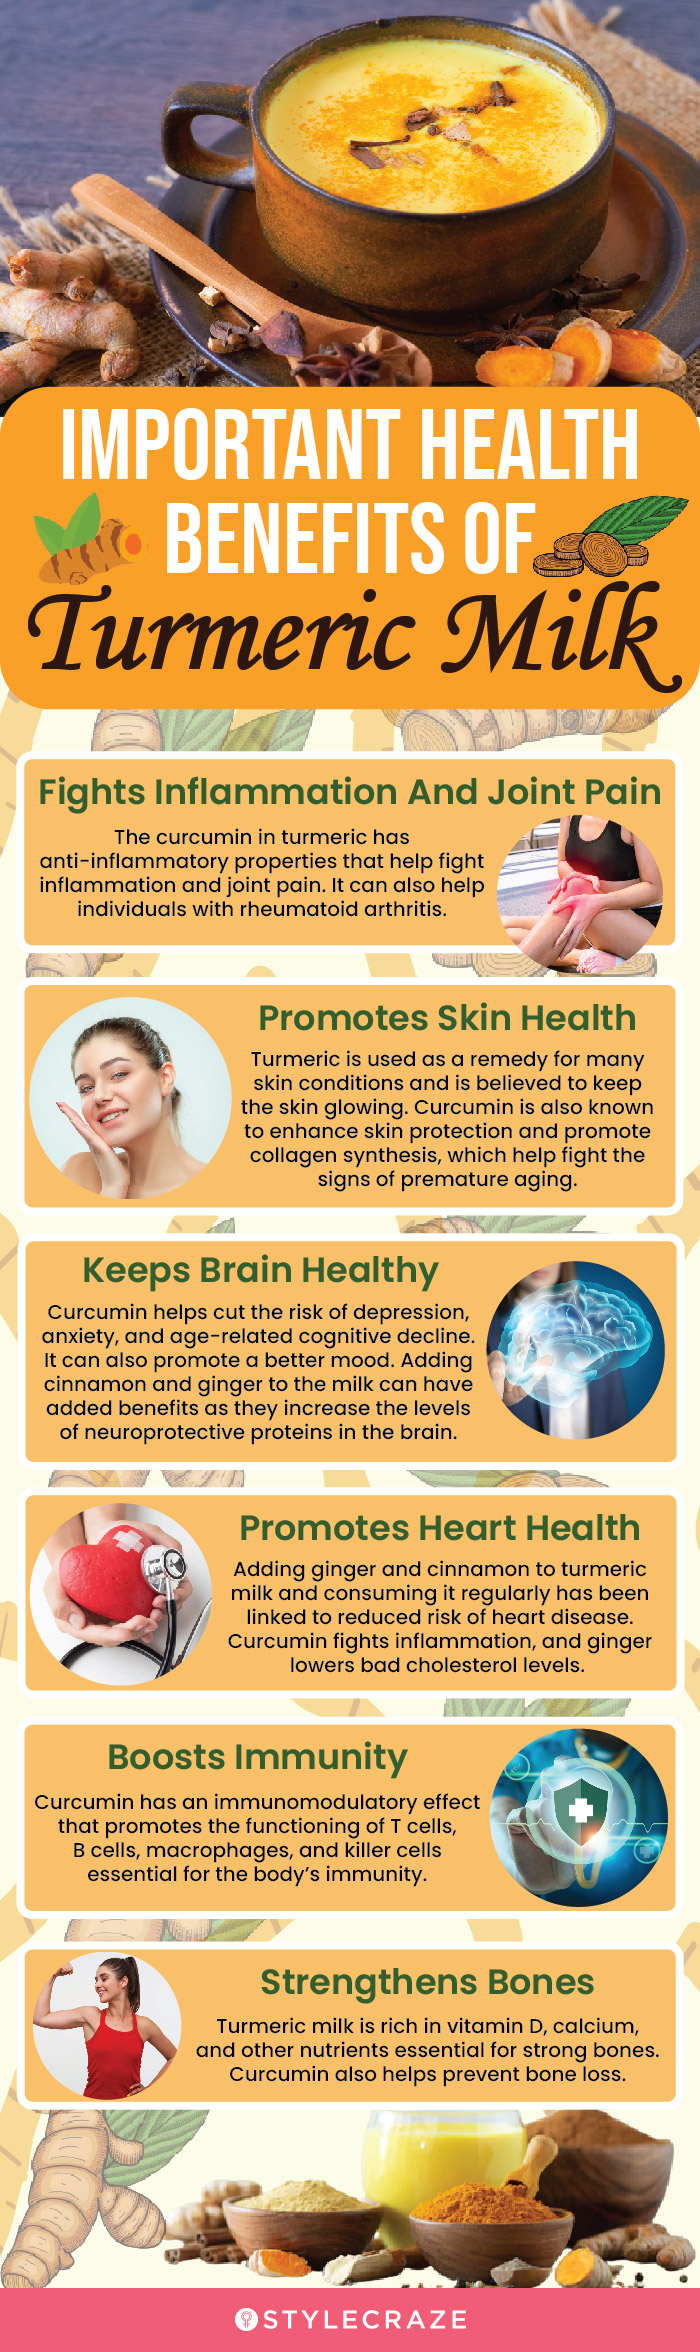 important health benefits of turmeric milk [infographic]